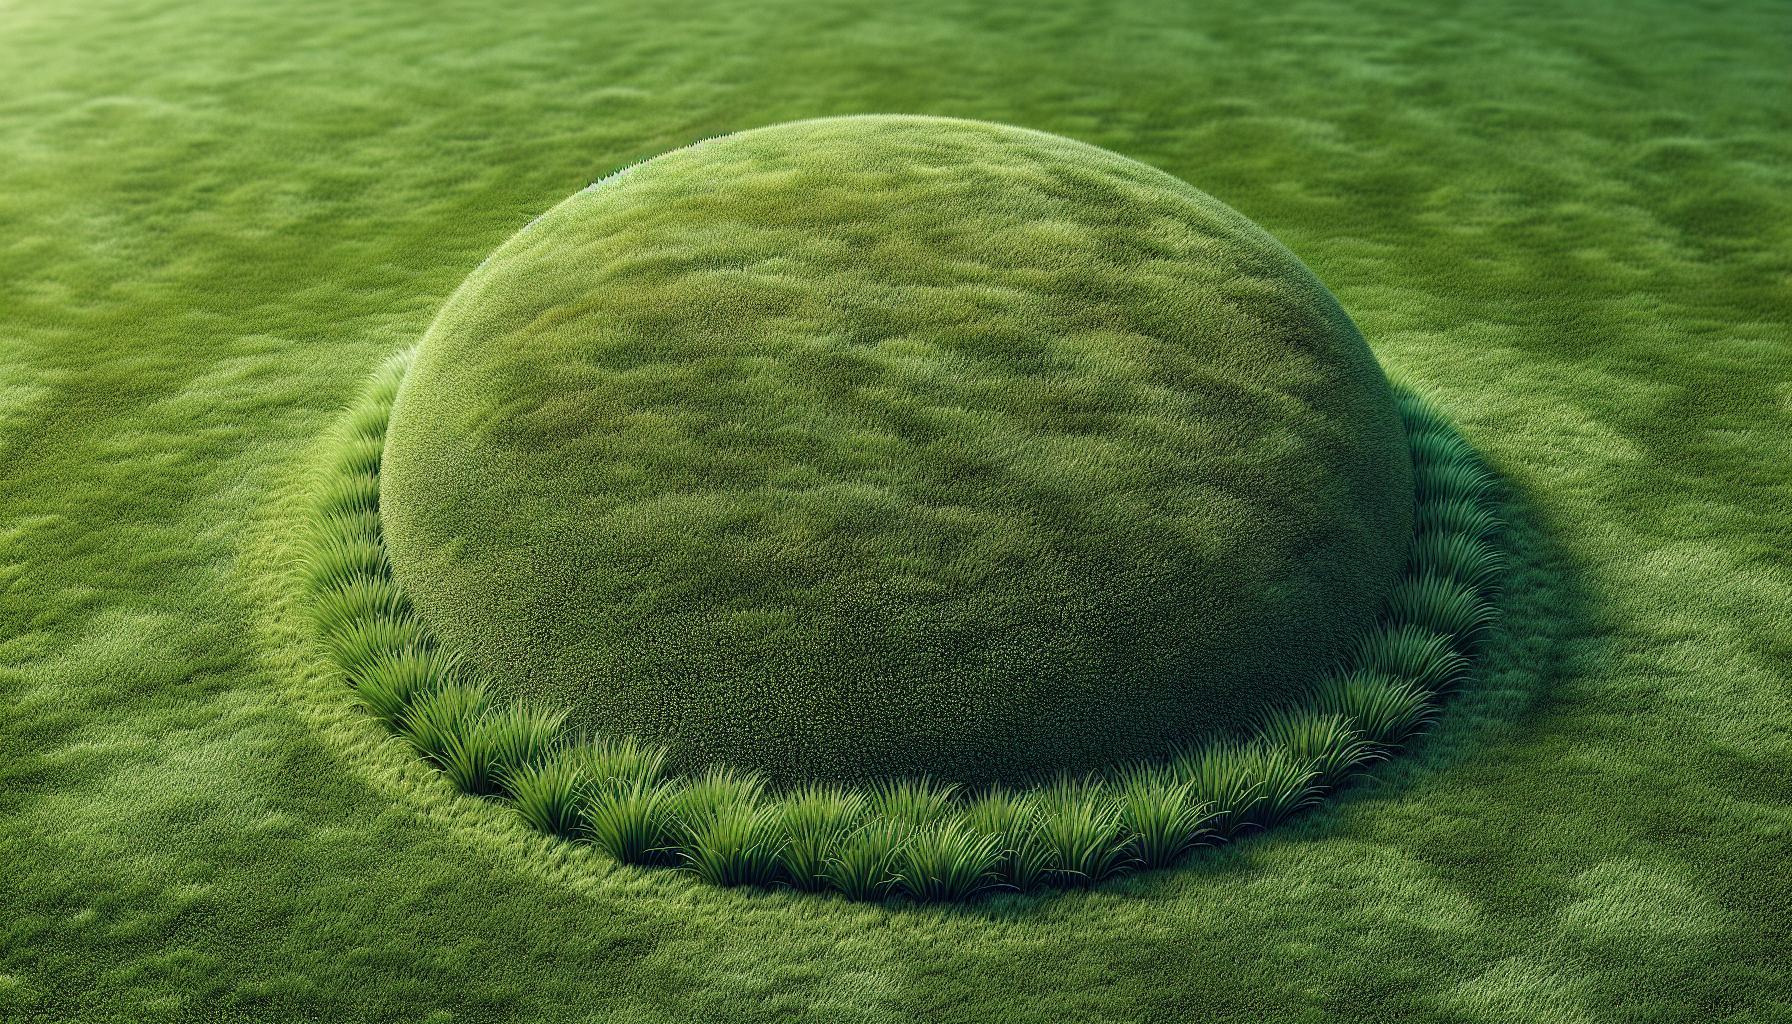 green mound grassy landscape